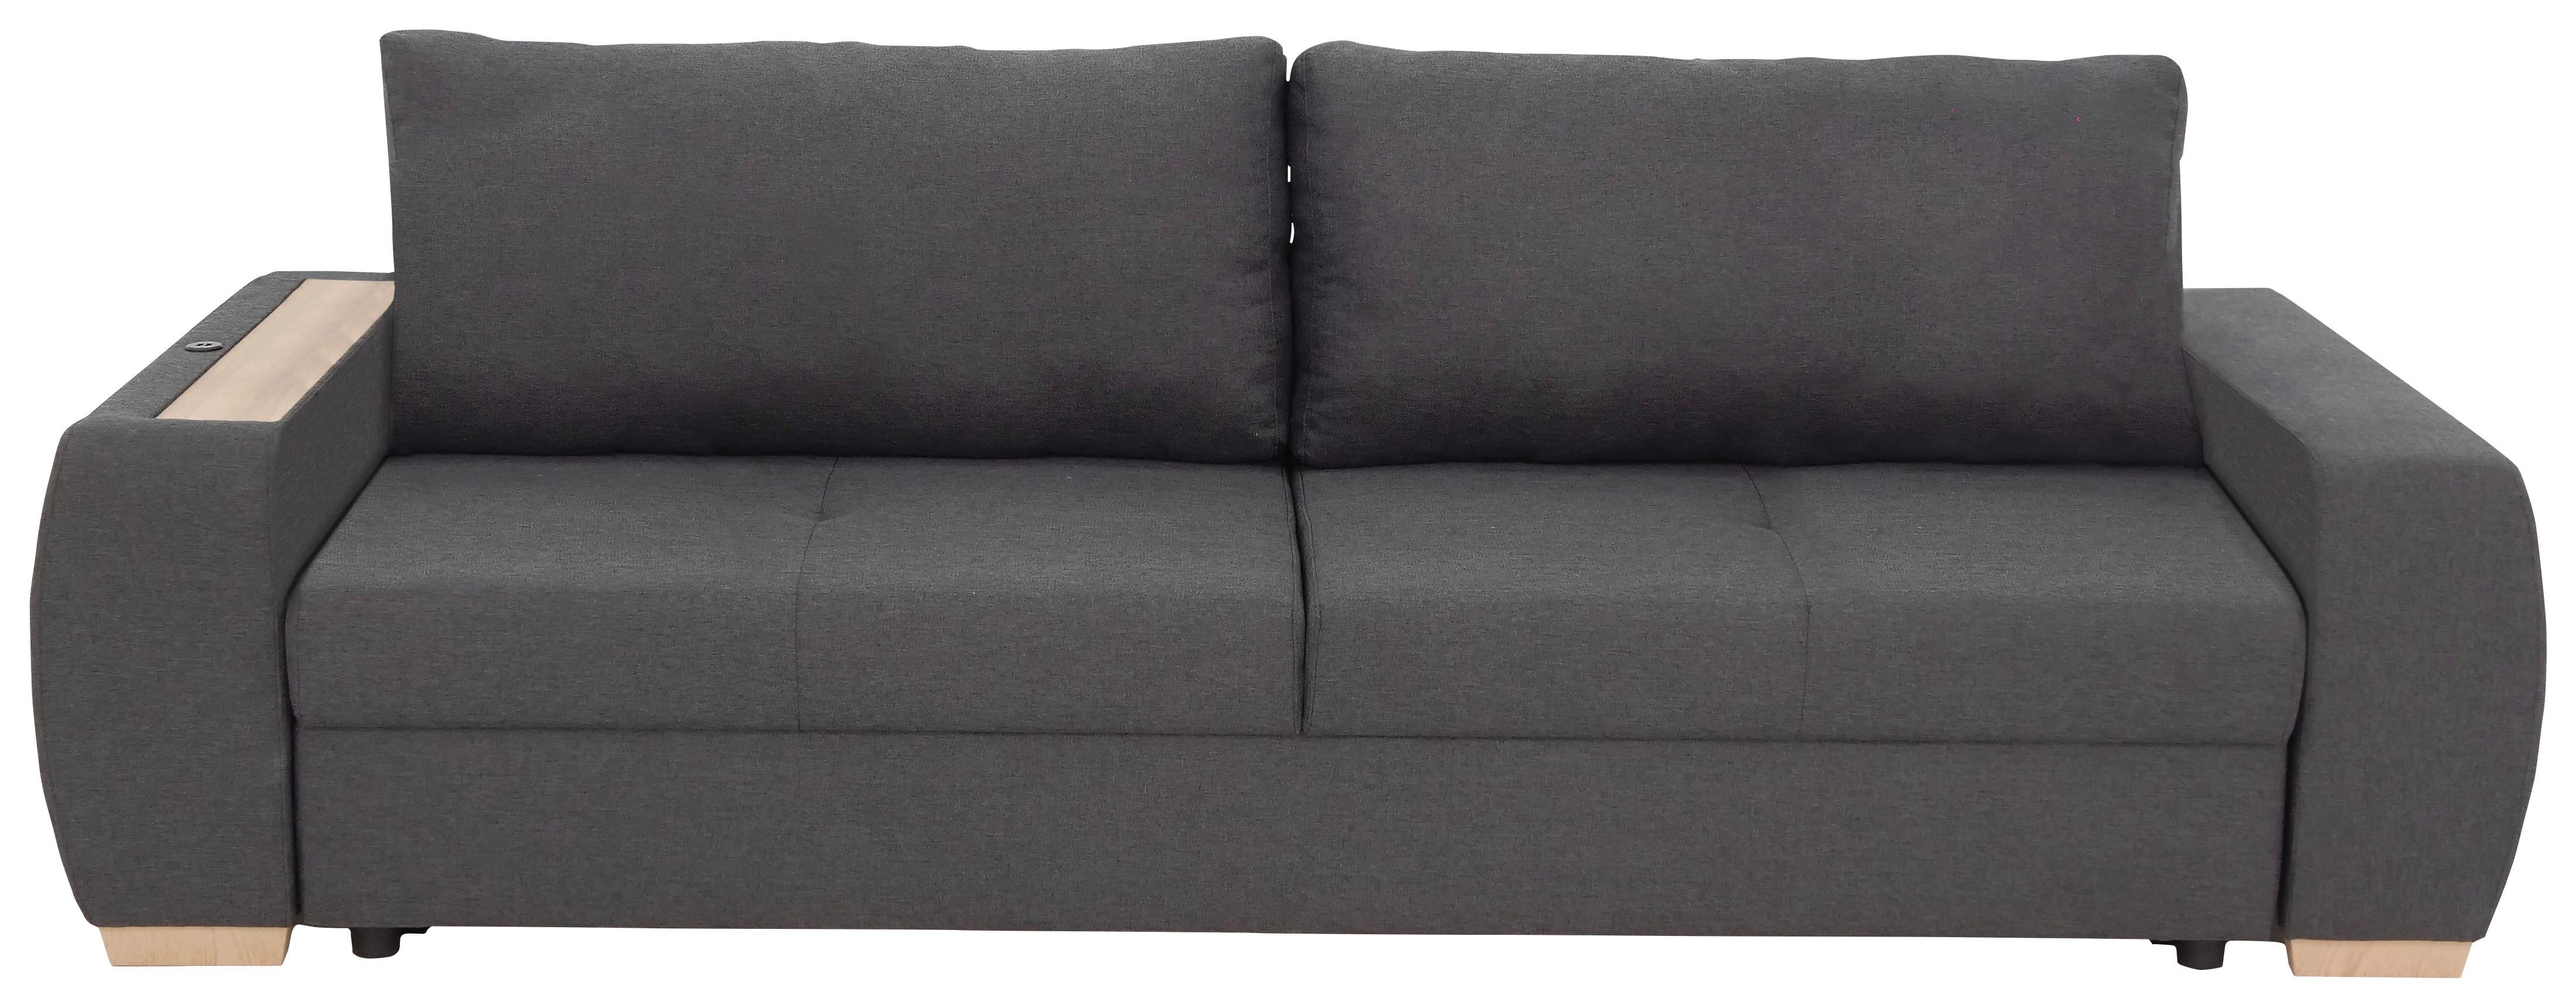 3-Sitzer-Sofa Mit Schlaffunktion Bongo Anthrazit - Anthrazit, Basics, Textil (238/85/88cm) - P & B